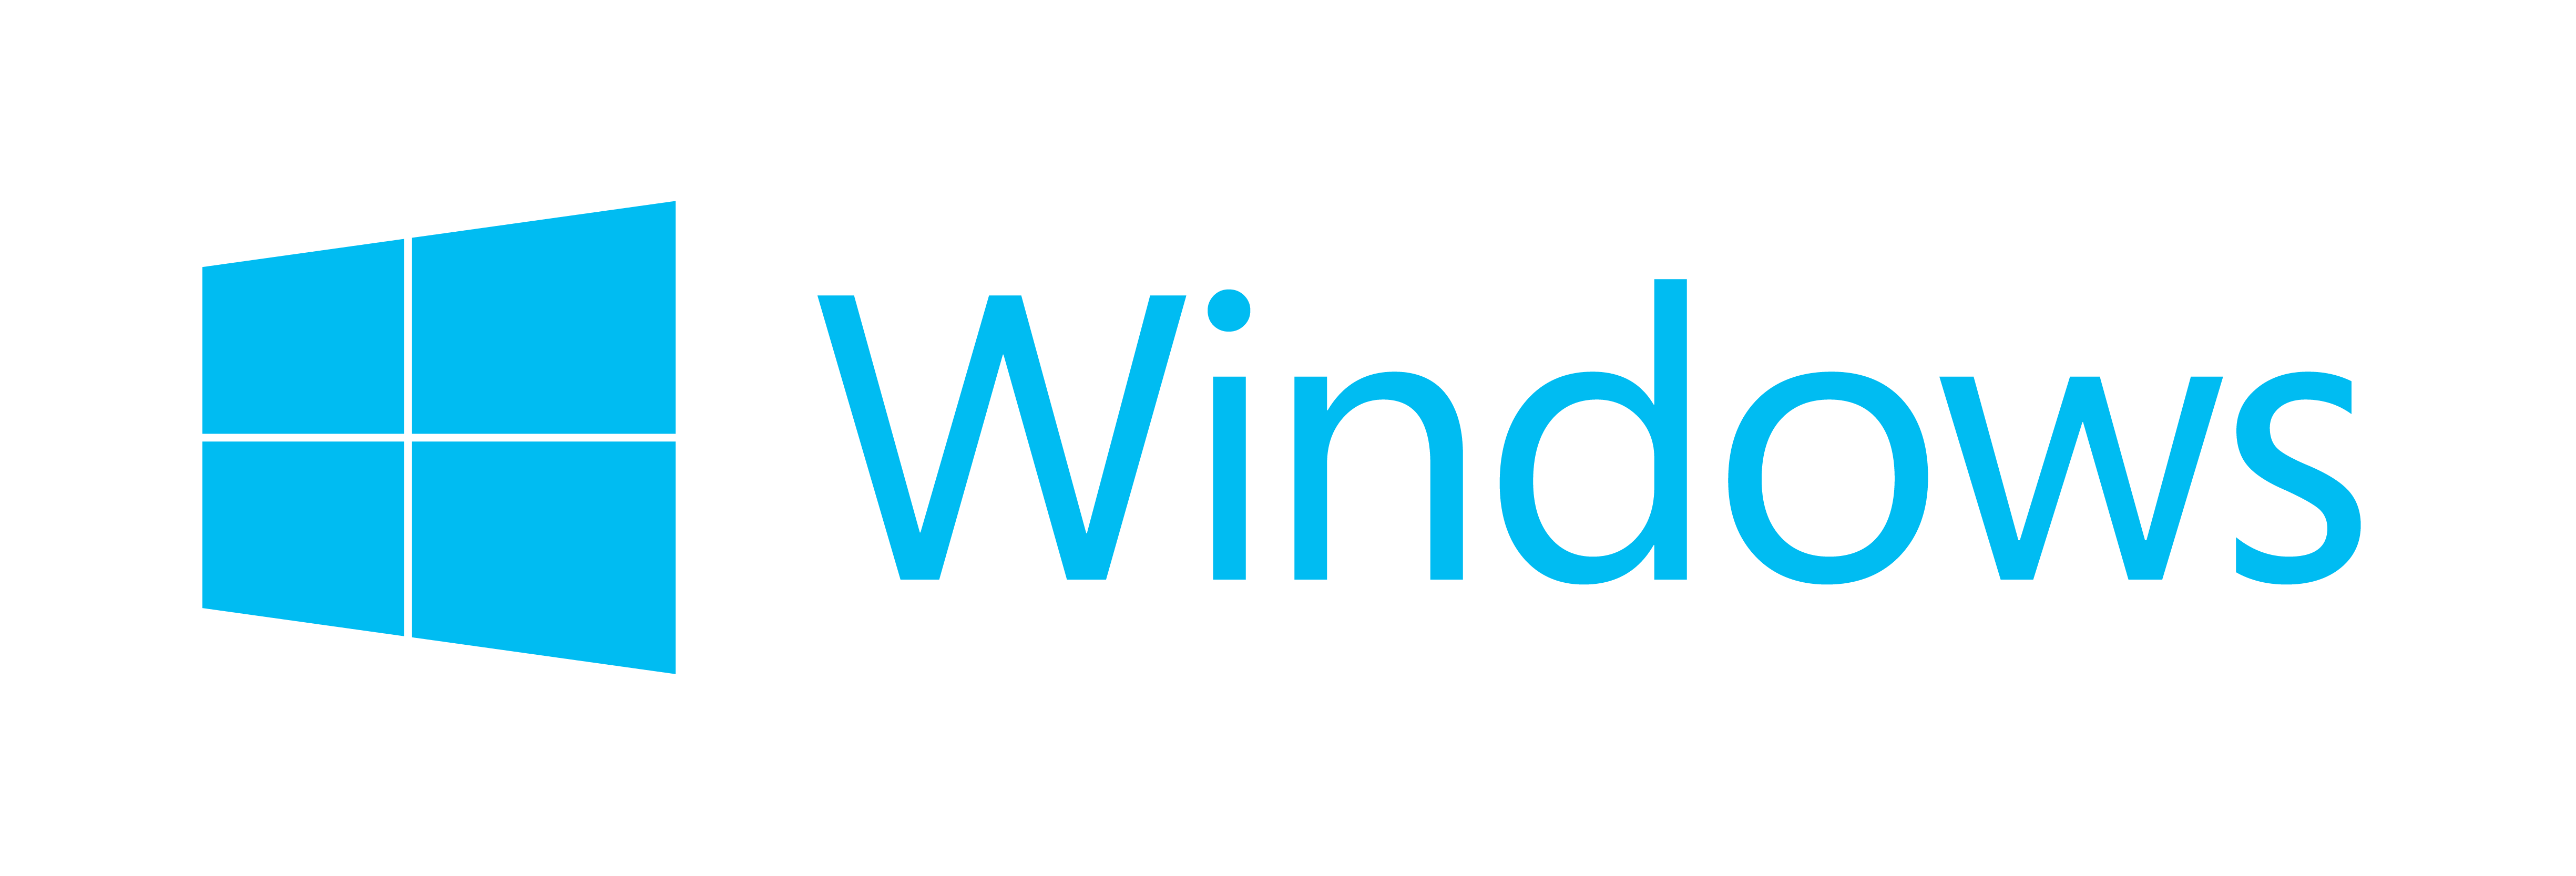 Windows XP logo.png